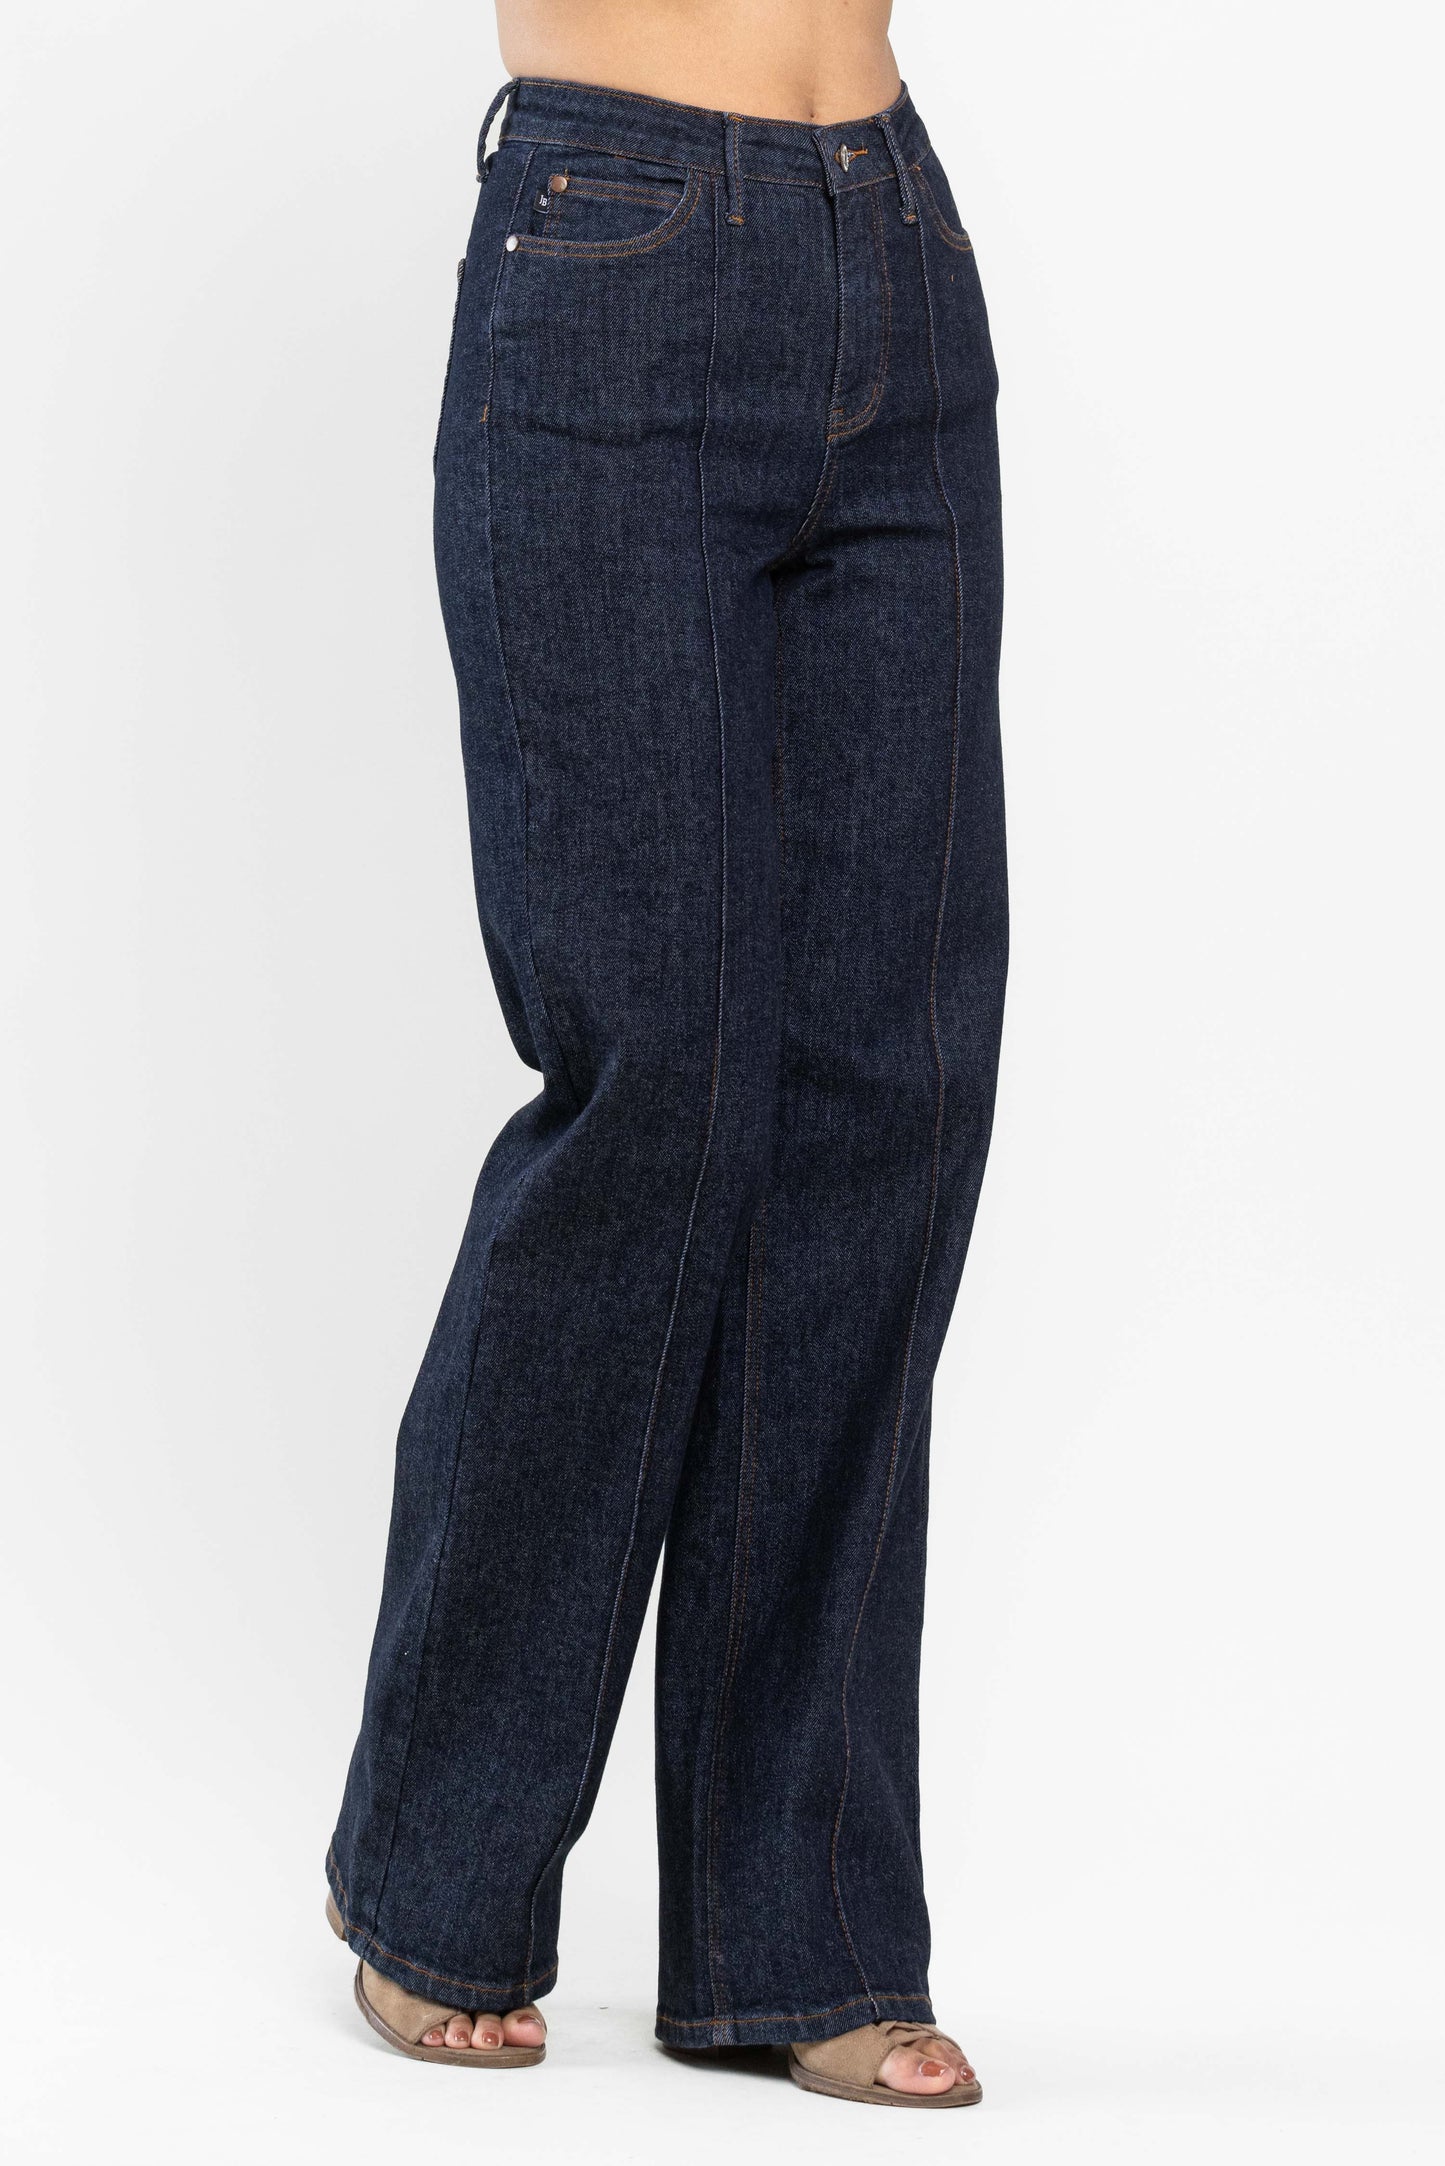 Judy Blue High Waisted Front Seam Detail Wide Leg Jeans